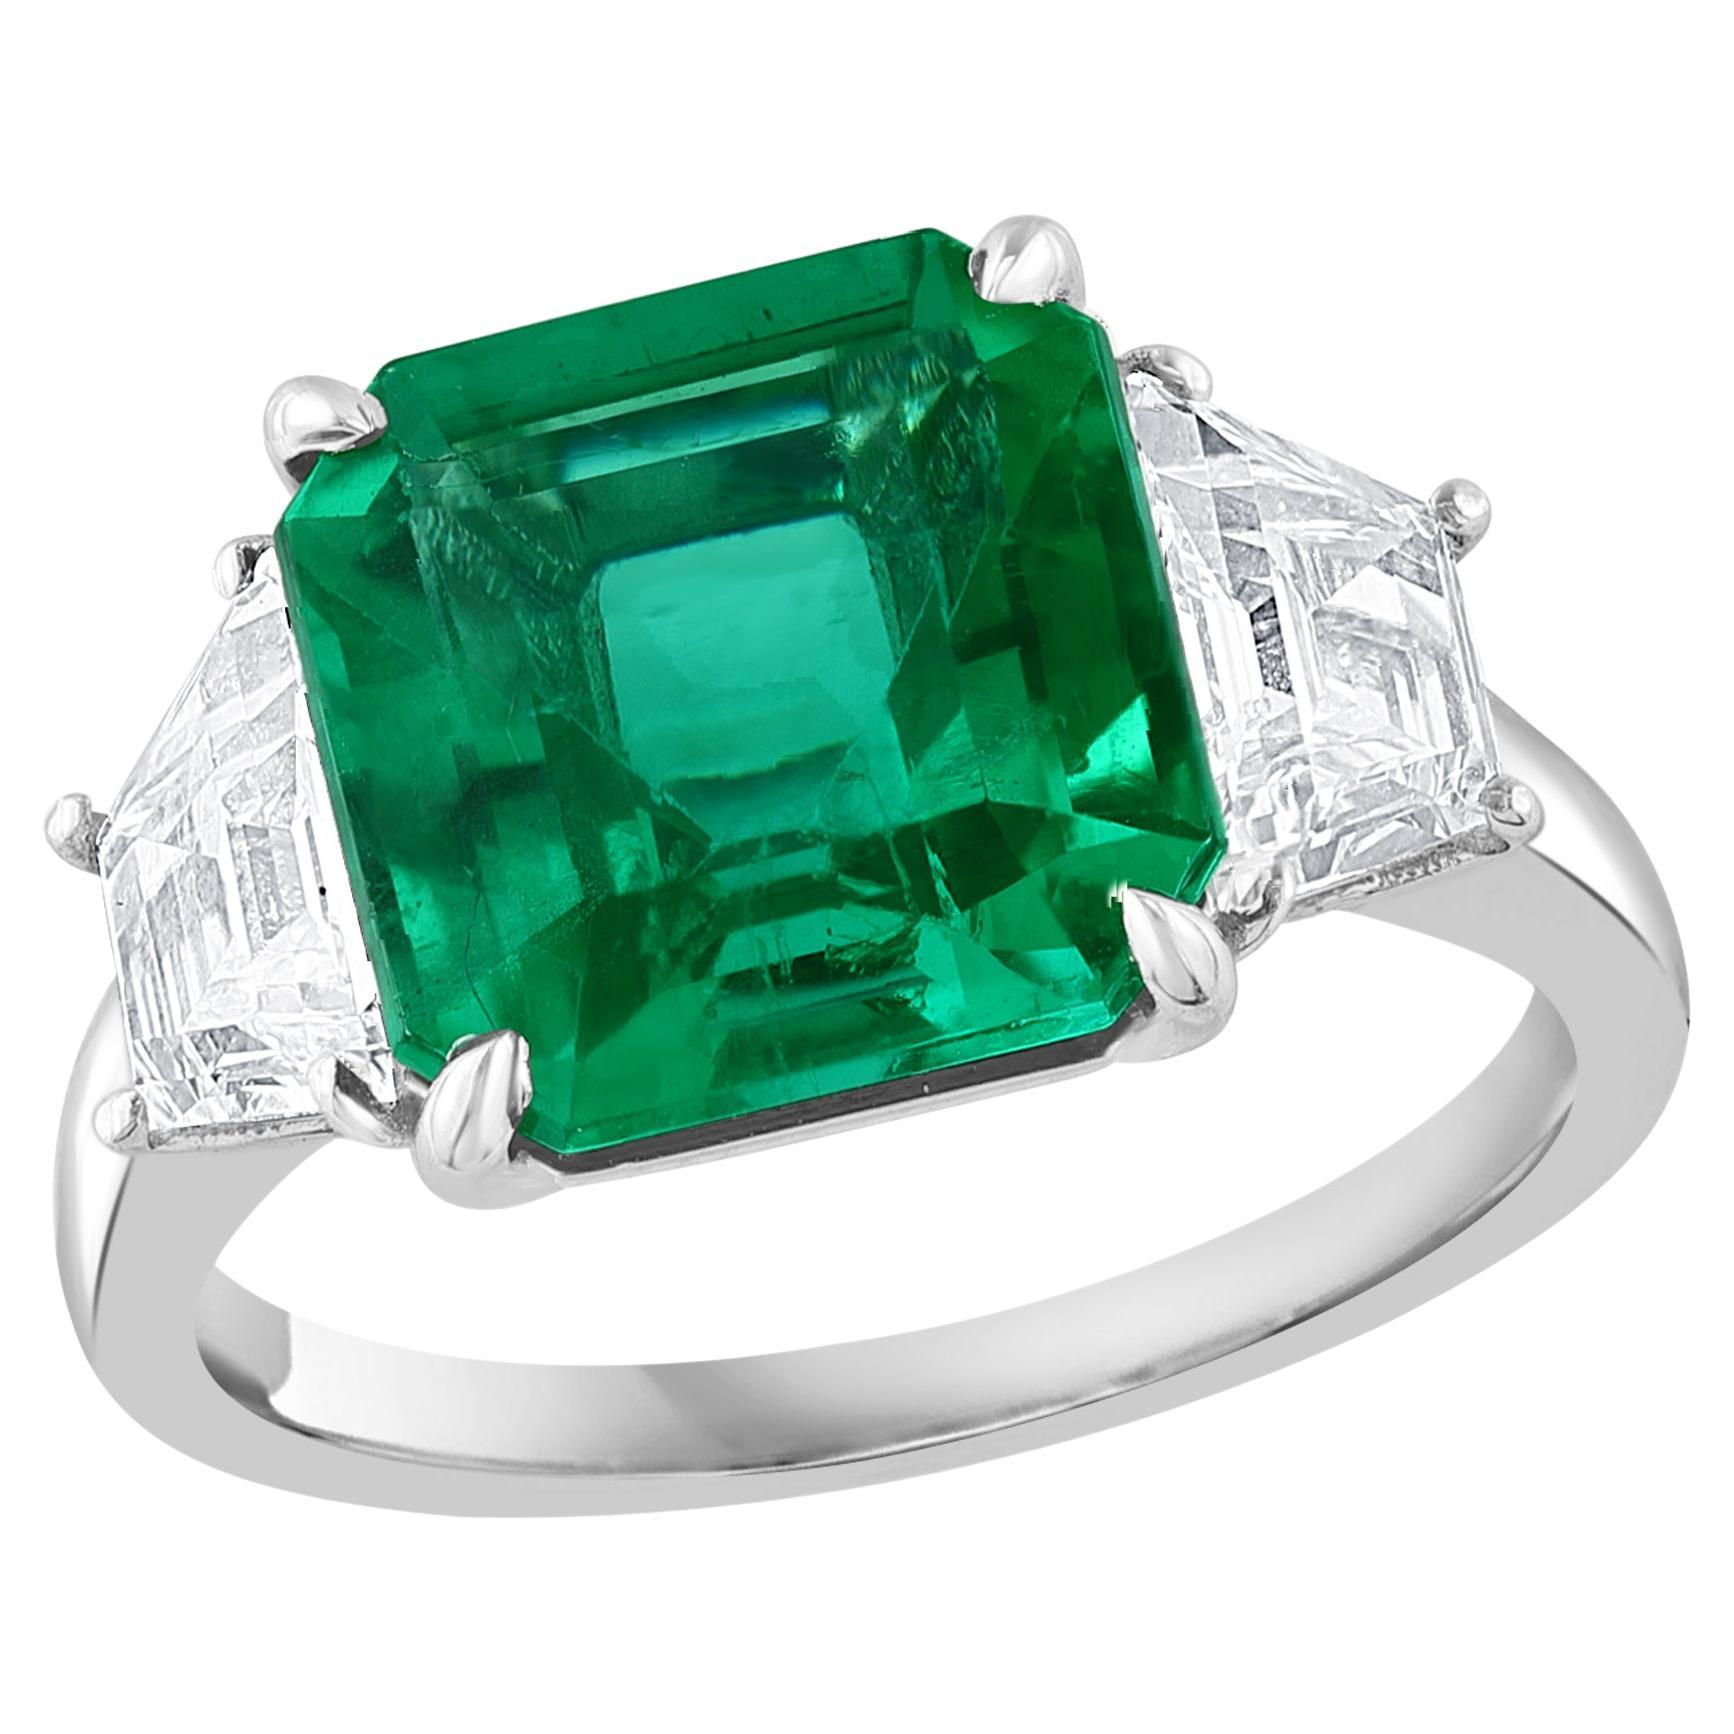 Certified 4.78 Carat Emerald Cut Emerald Diamond Engagement Ring in Platinum For Sale